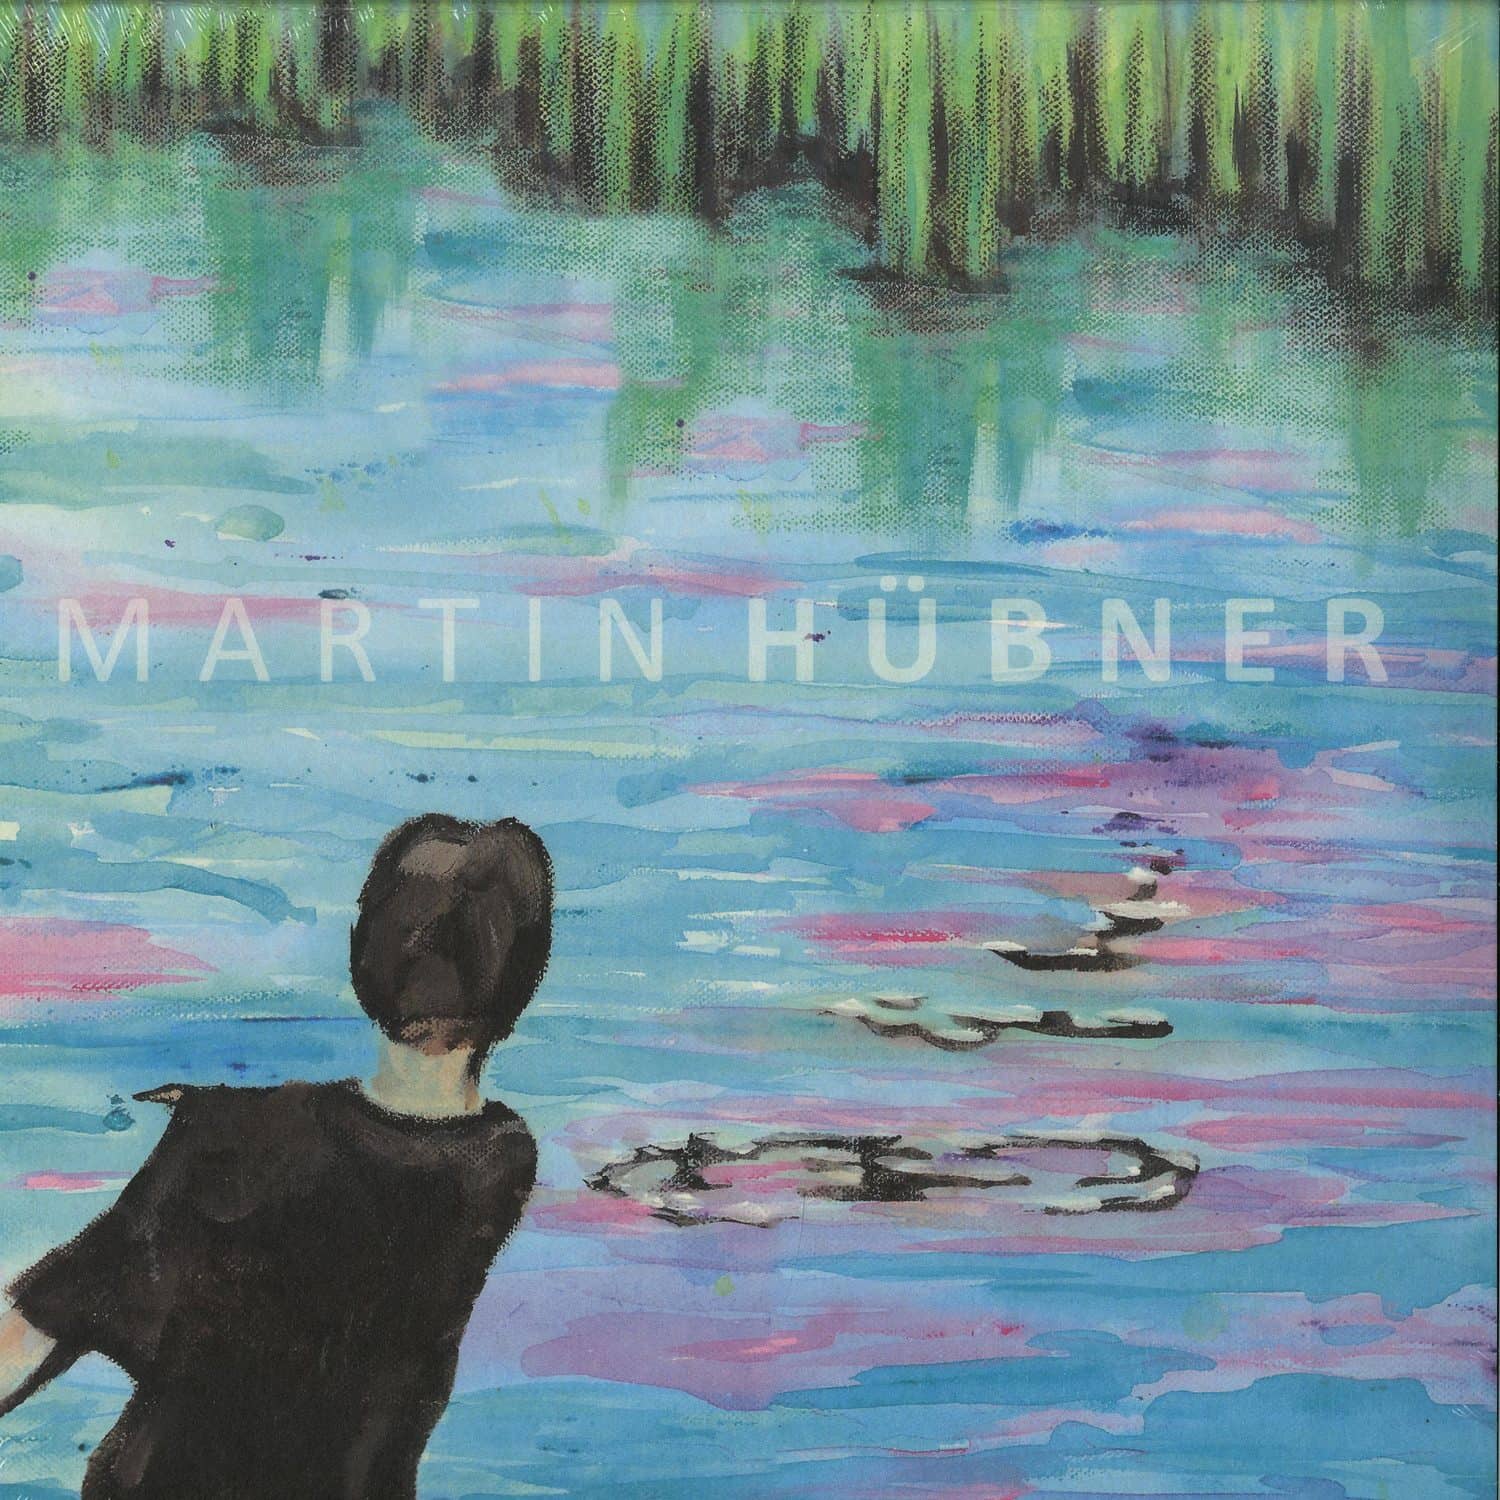 Martin Huebner - MARTIN HUEBNER